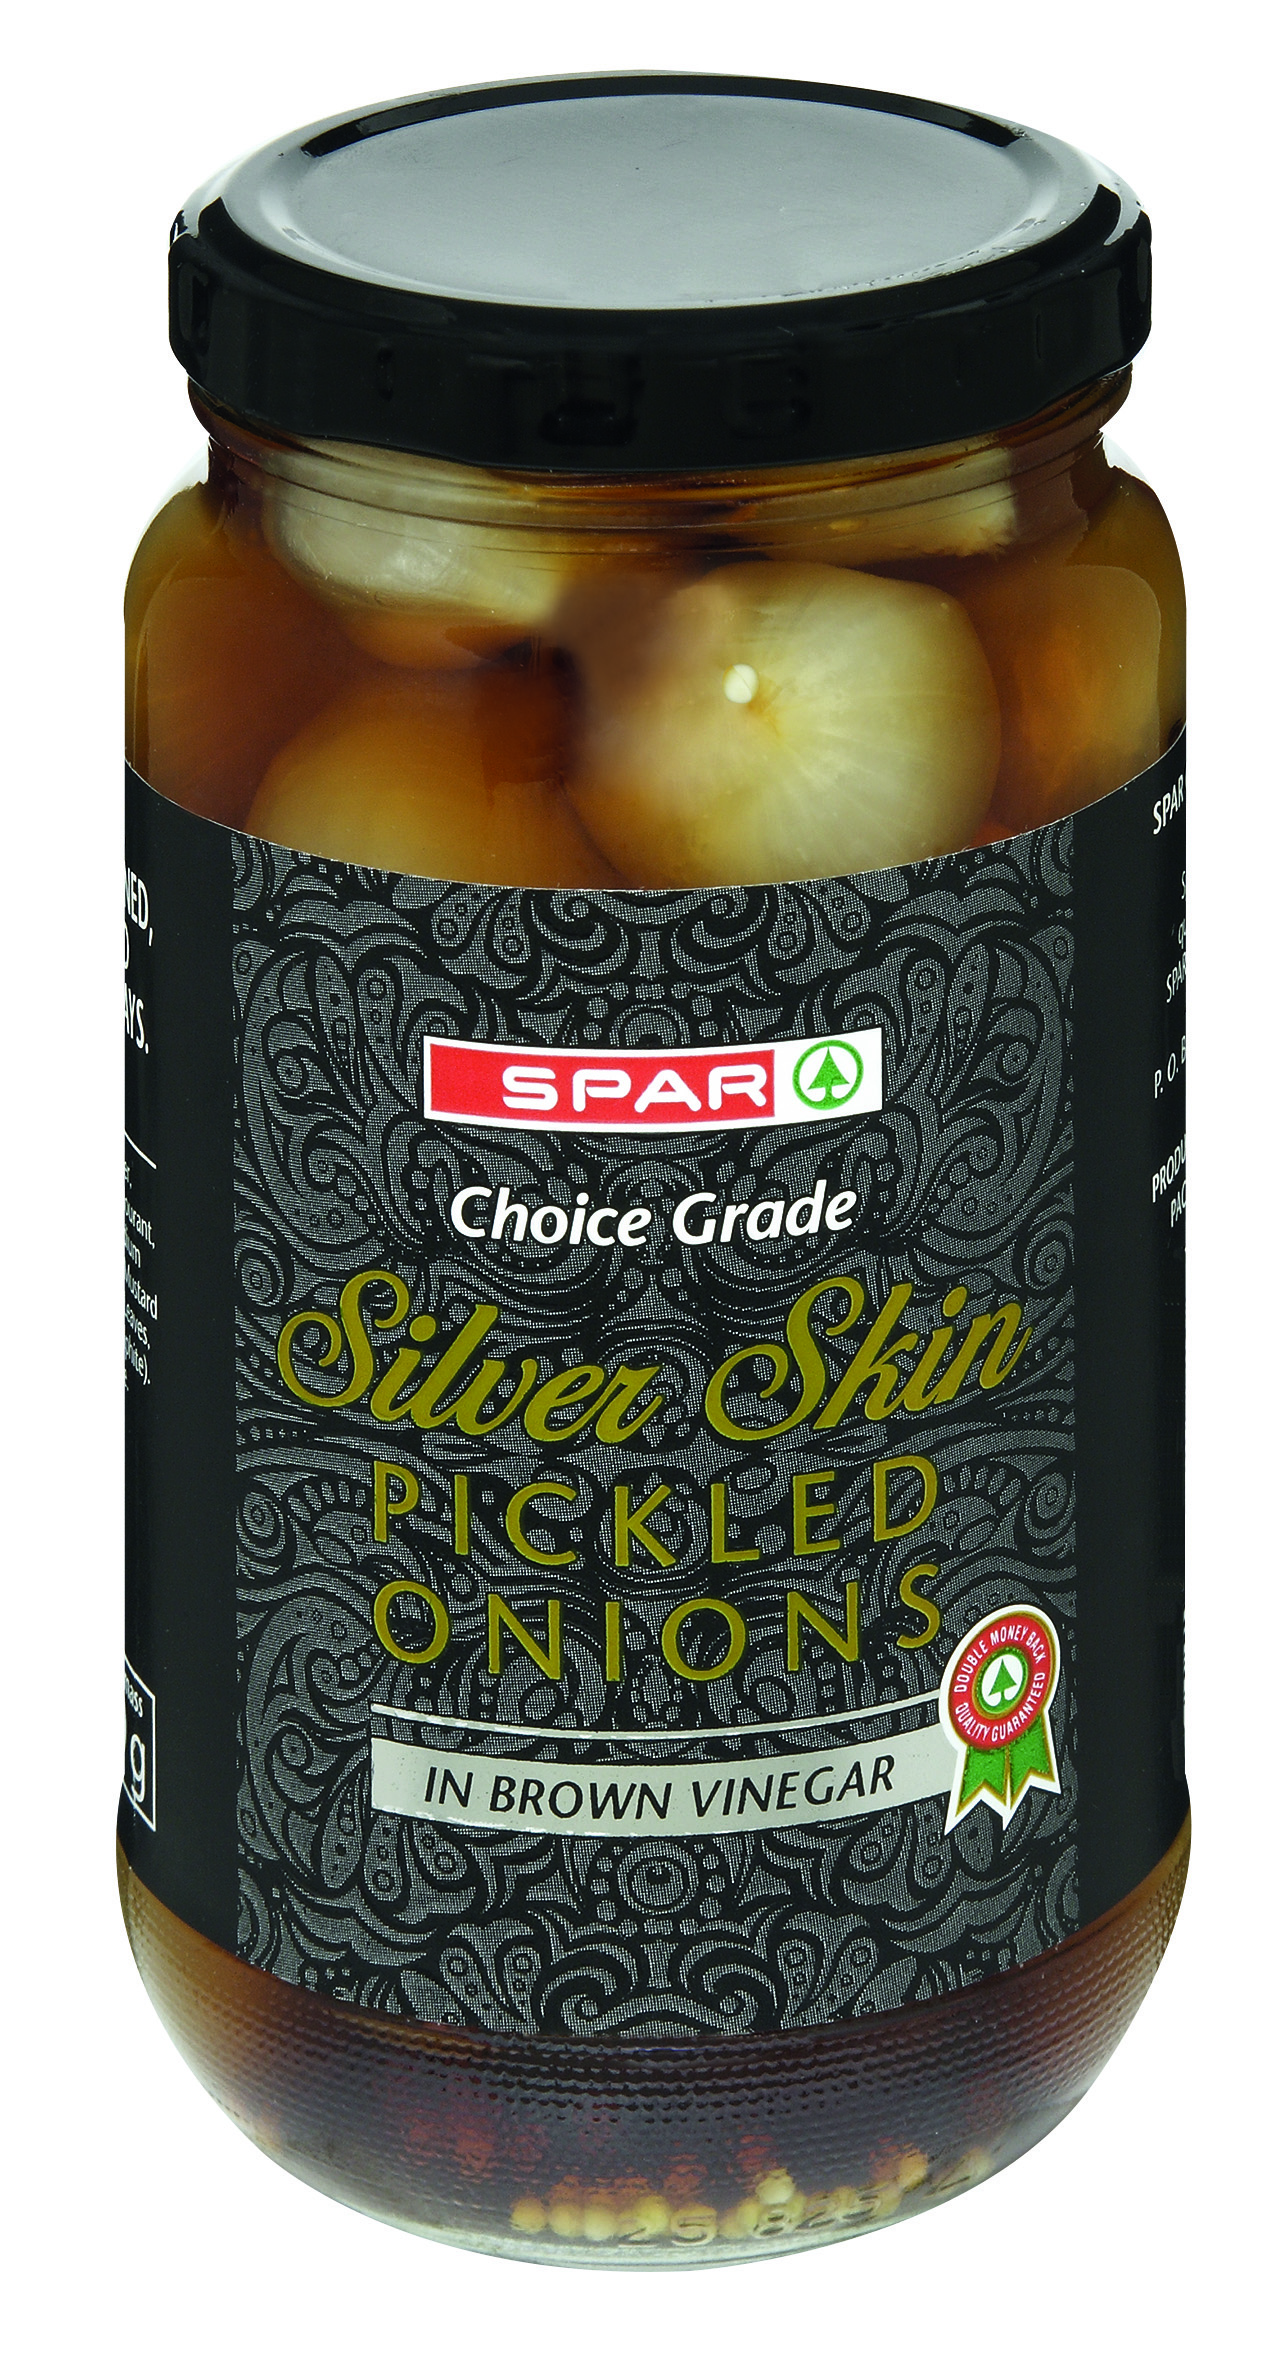 silverskin pickled onion brown